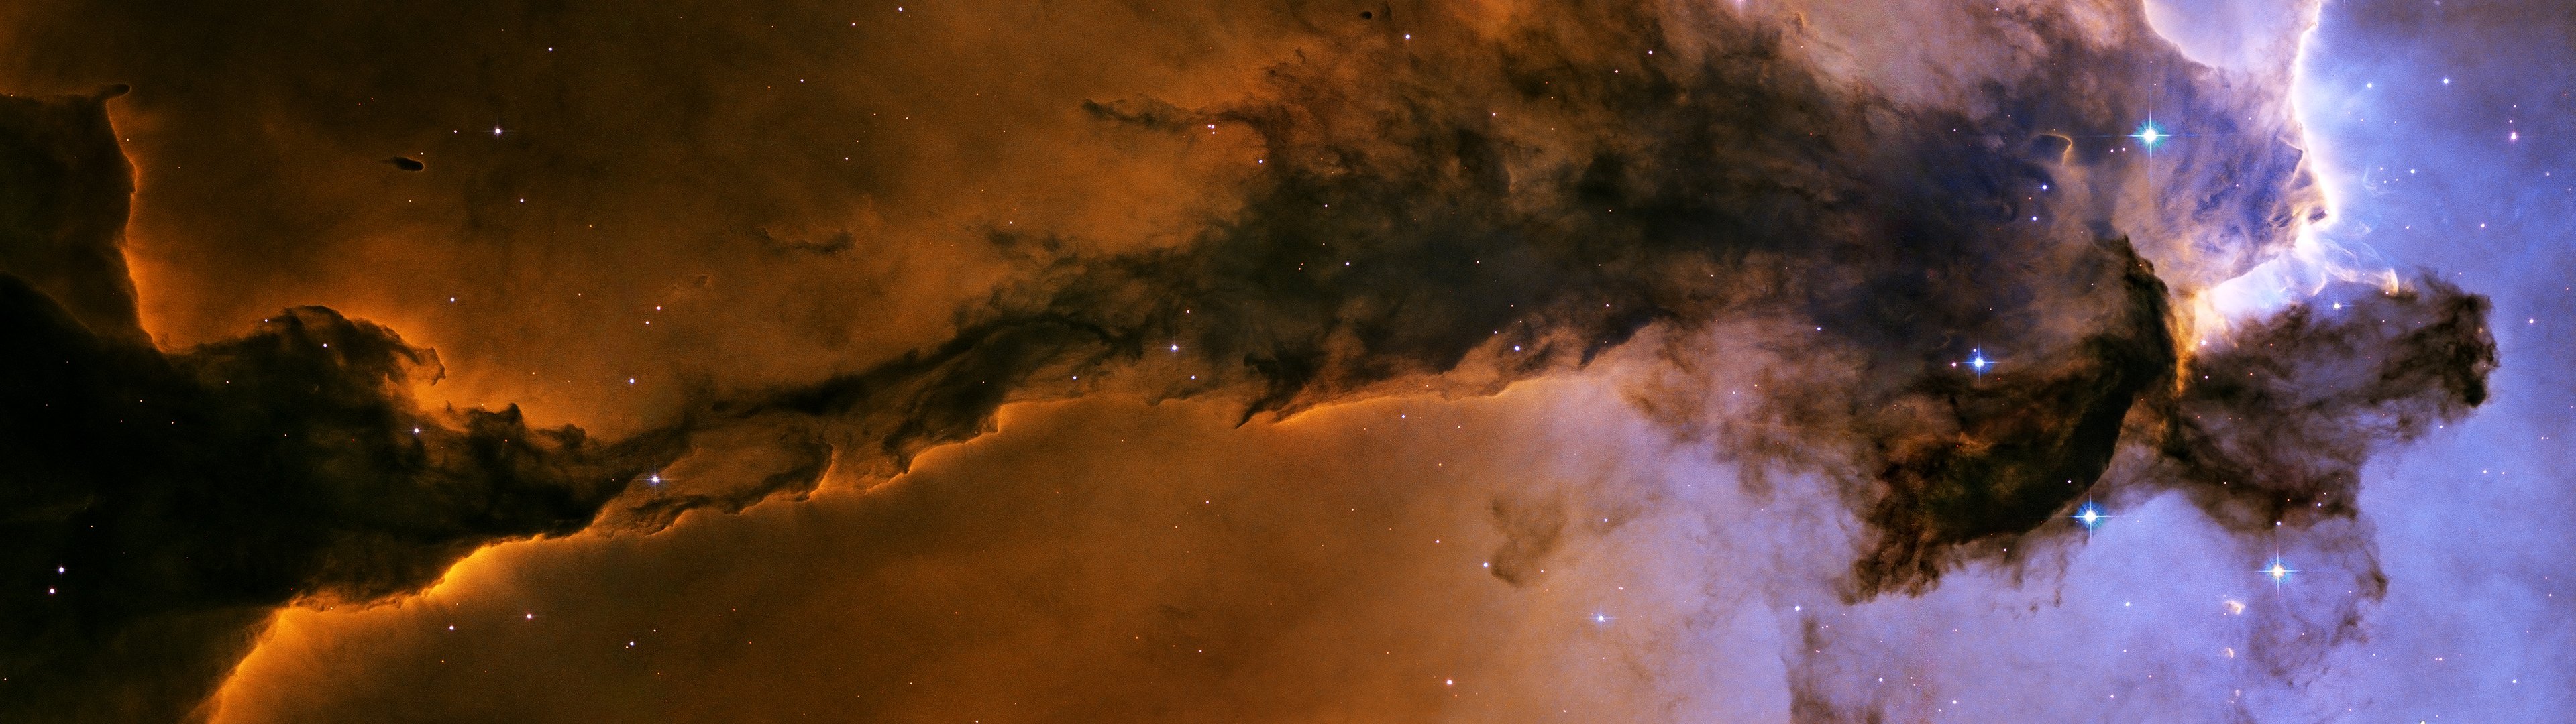 Get Outer Space Stars Nebulae Eagle Nebula Wallpaper